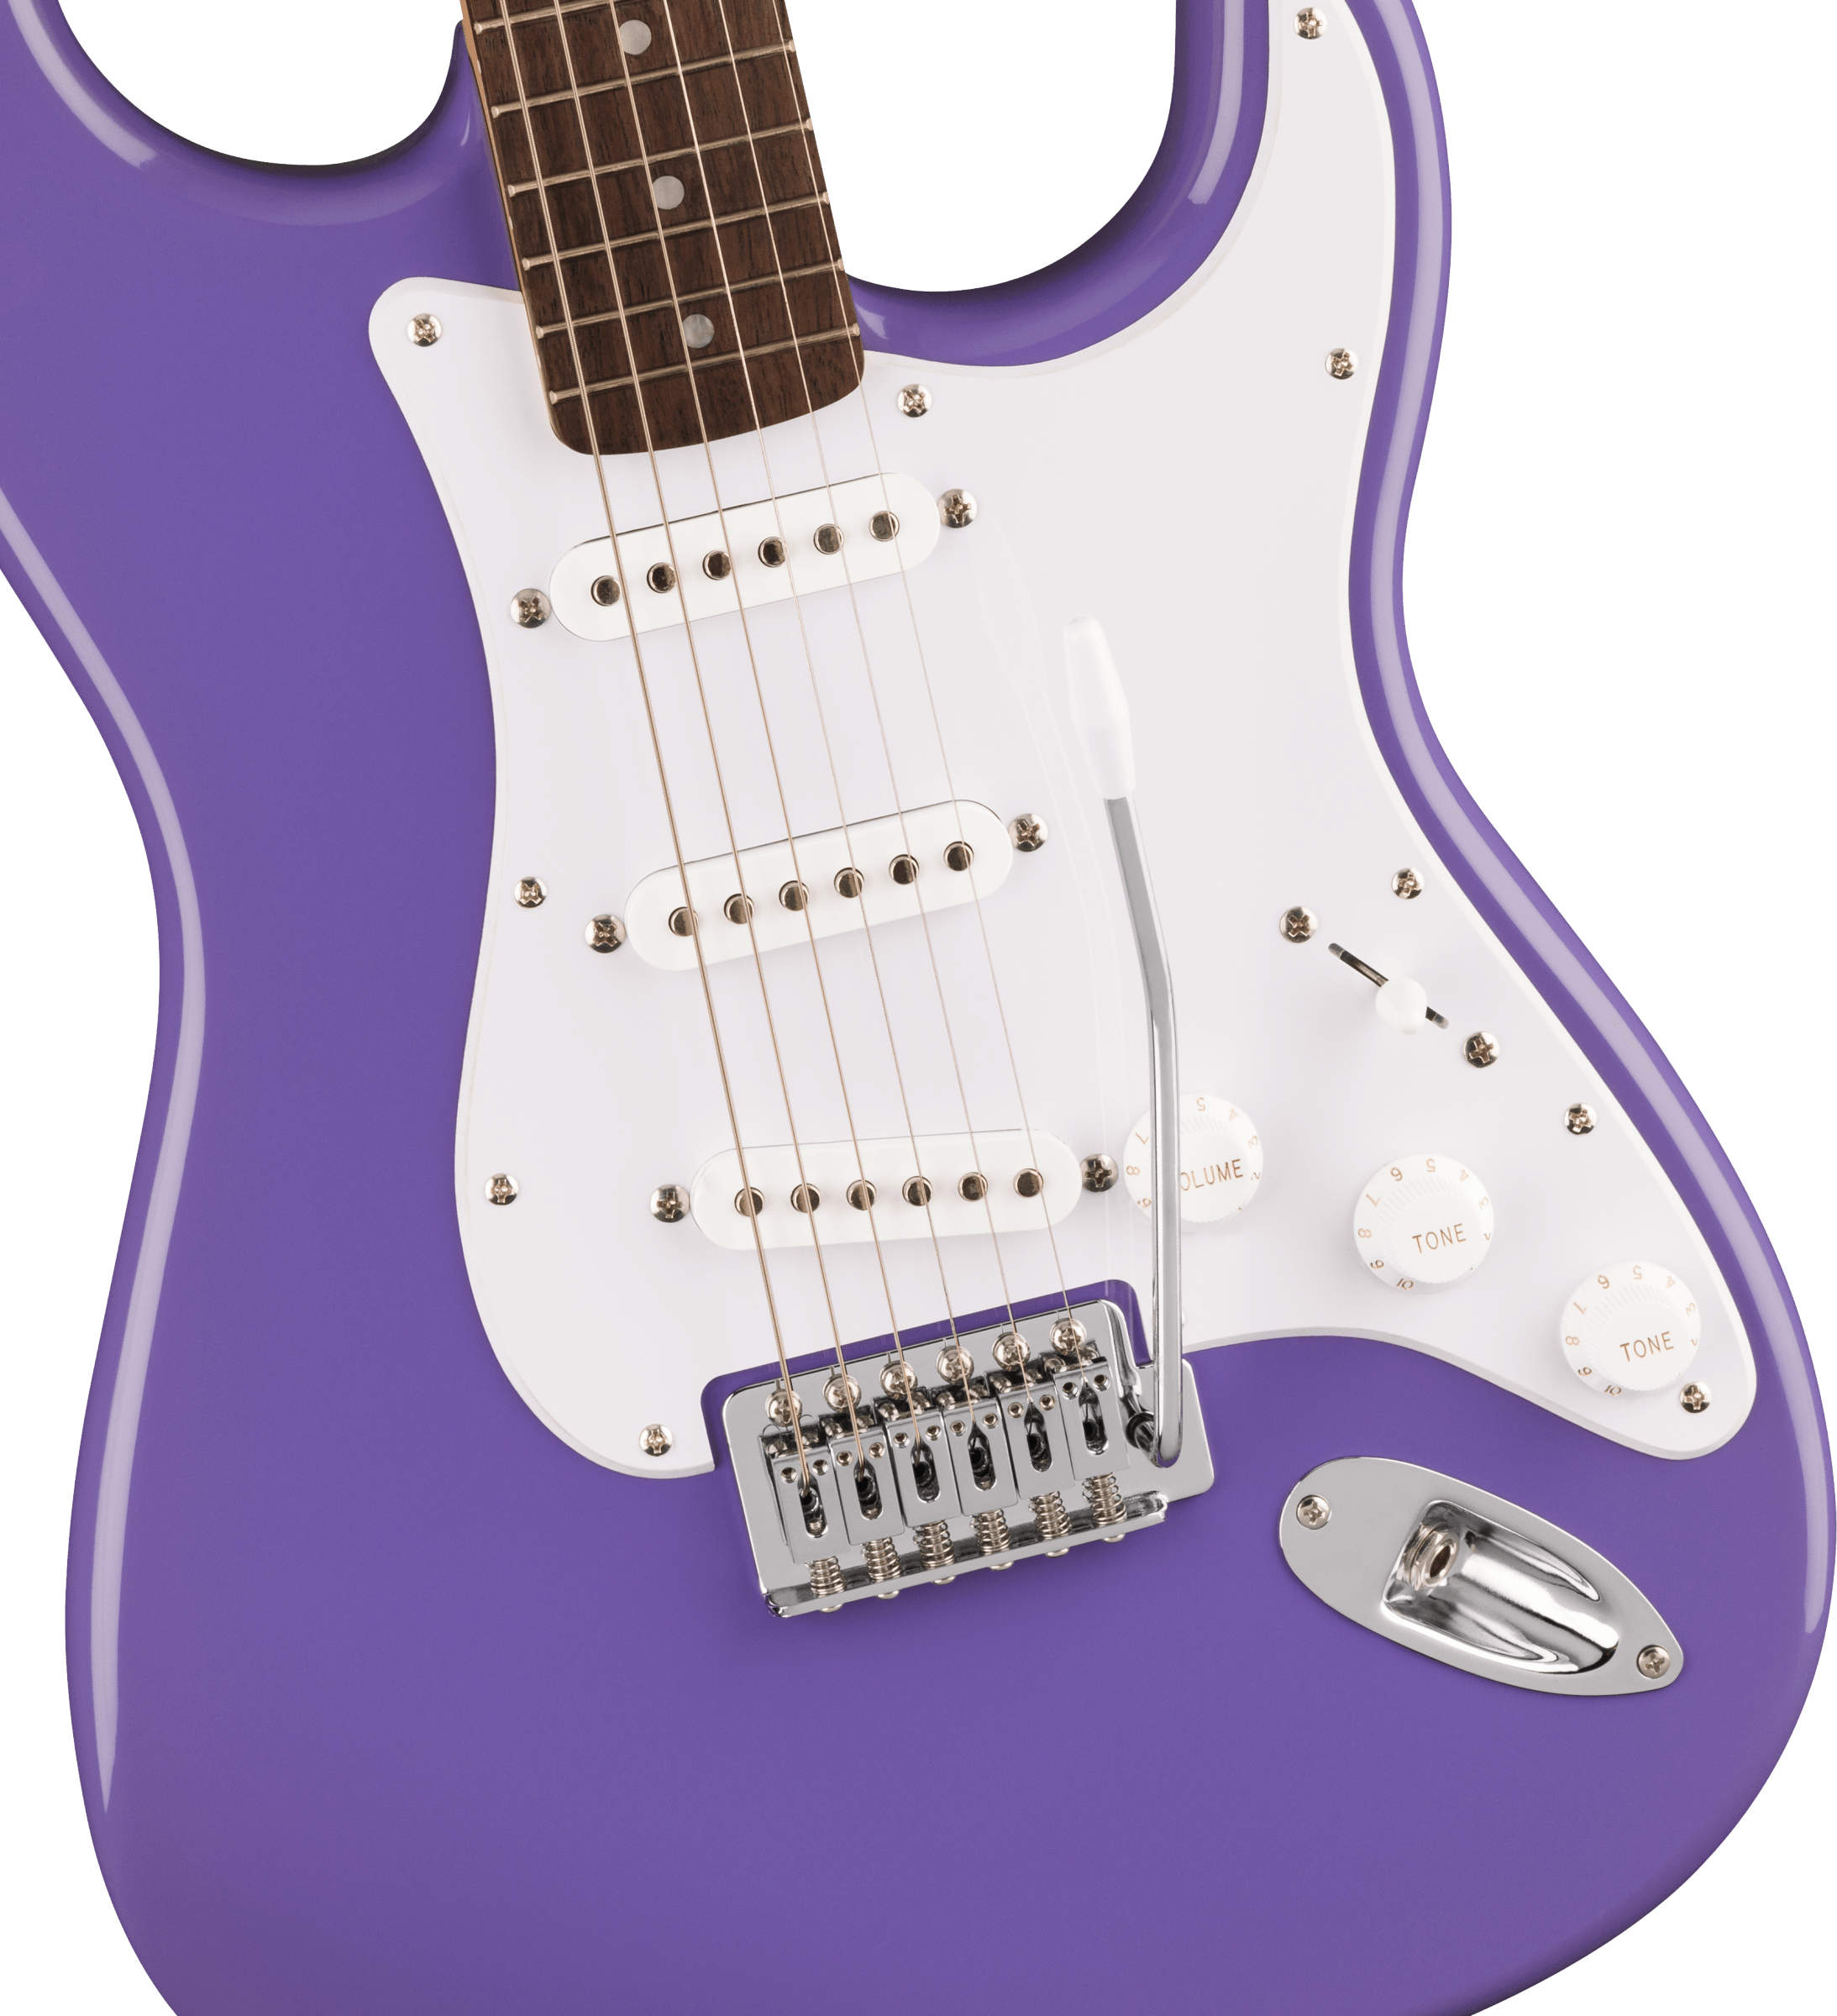 Squier Sonic™ Stratocaster®, Laurel Fingerboard, White Pickguard, Ultraviolet